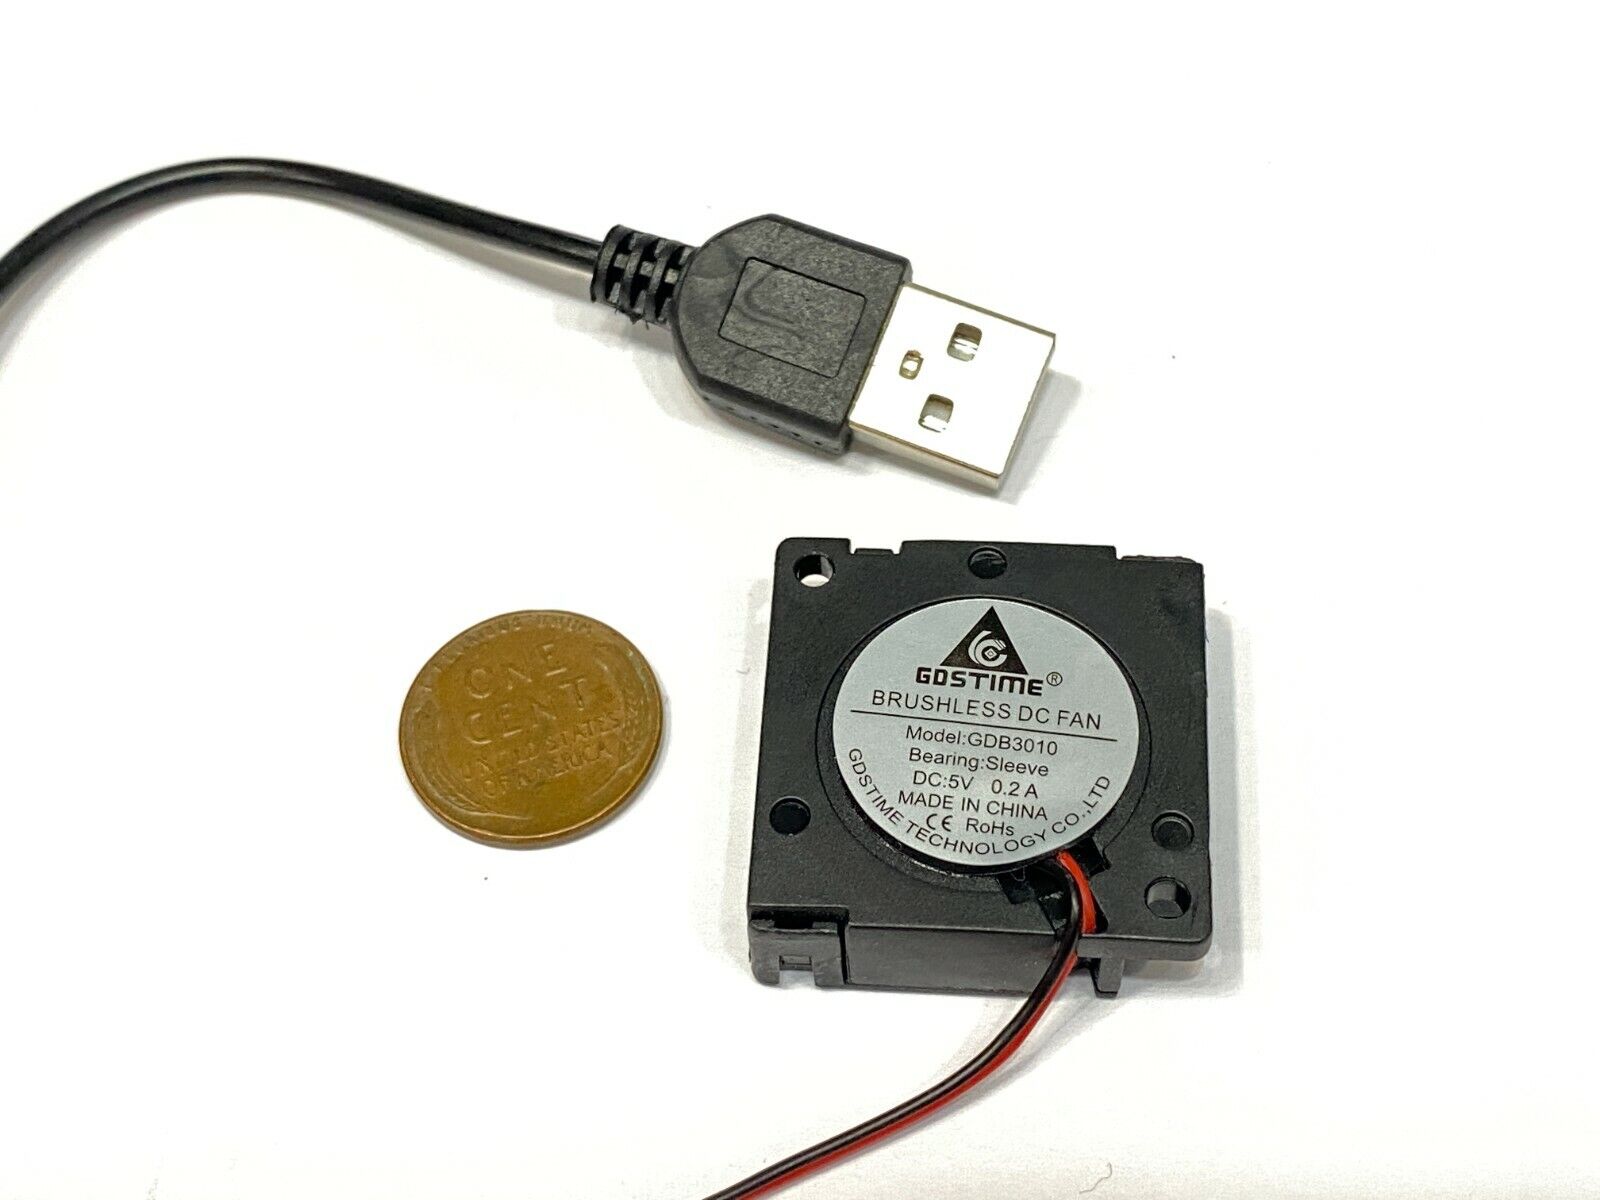  USB Blower 5v 30mm x 10mm 3cm dc quiet Cooling Fan Brushless 3010 2Pin E35